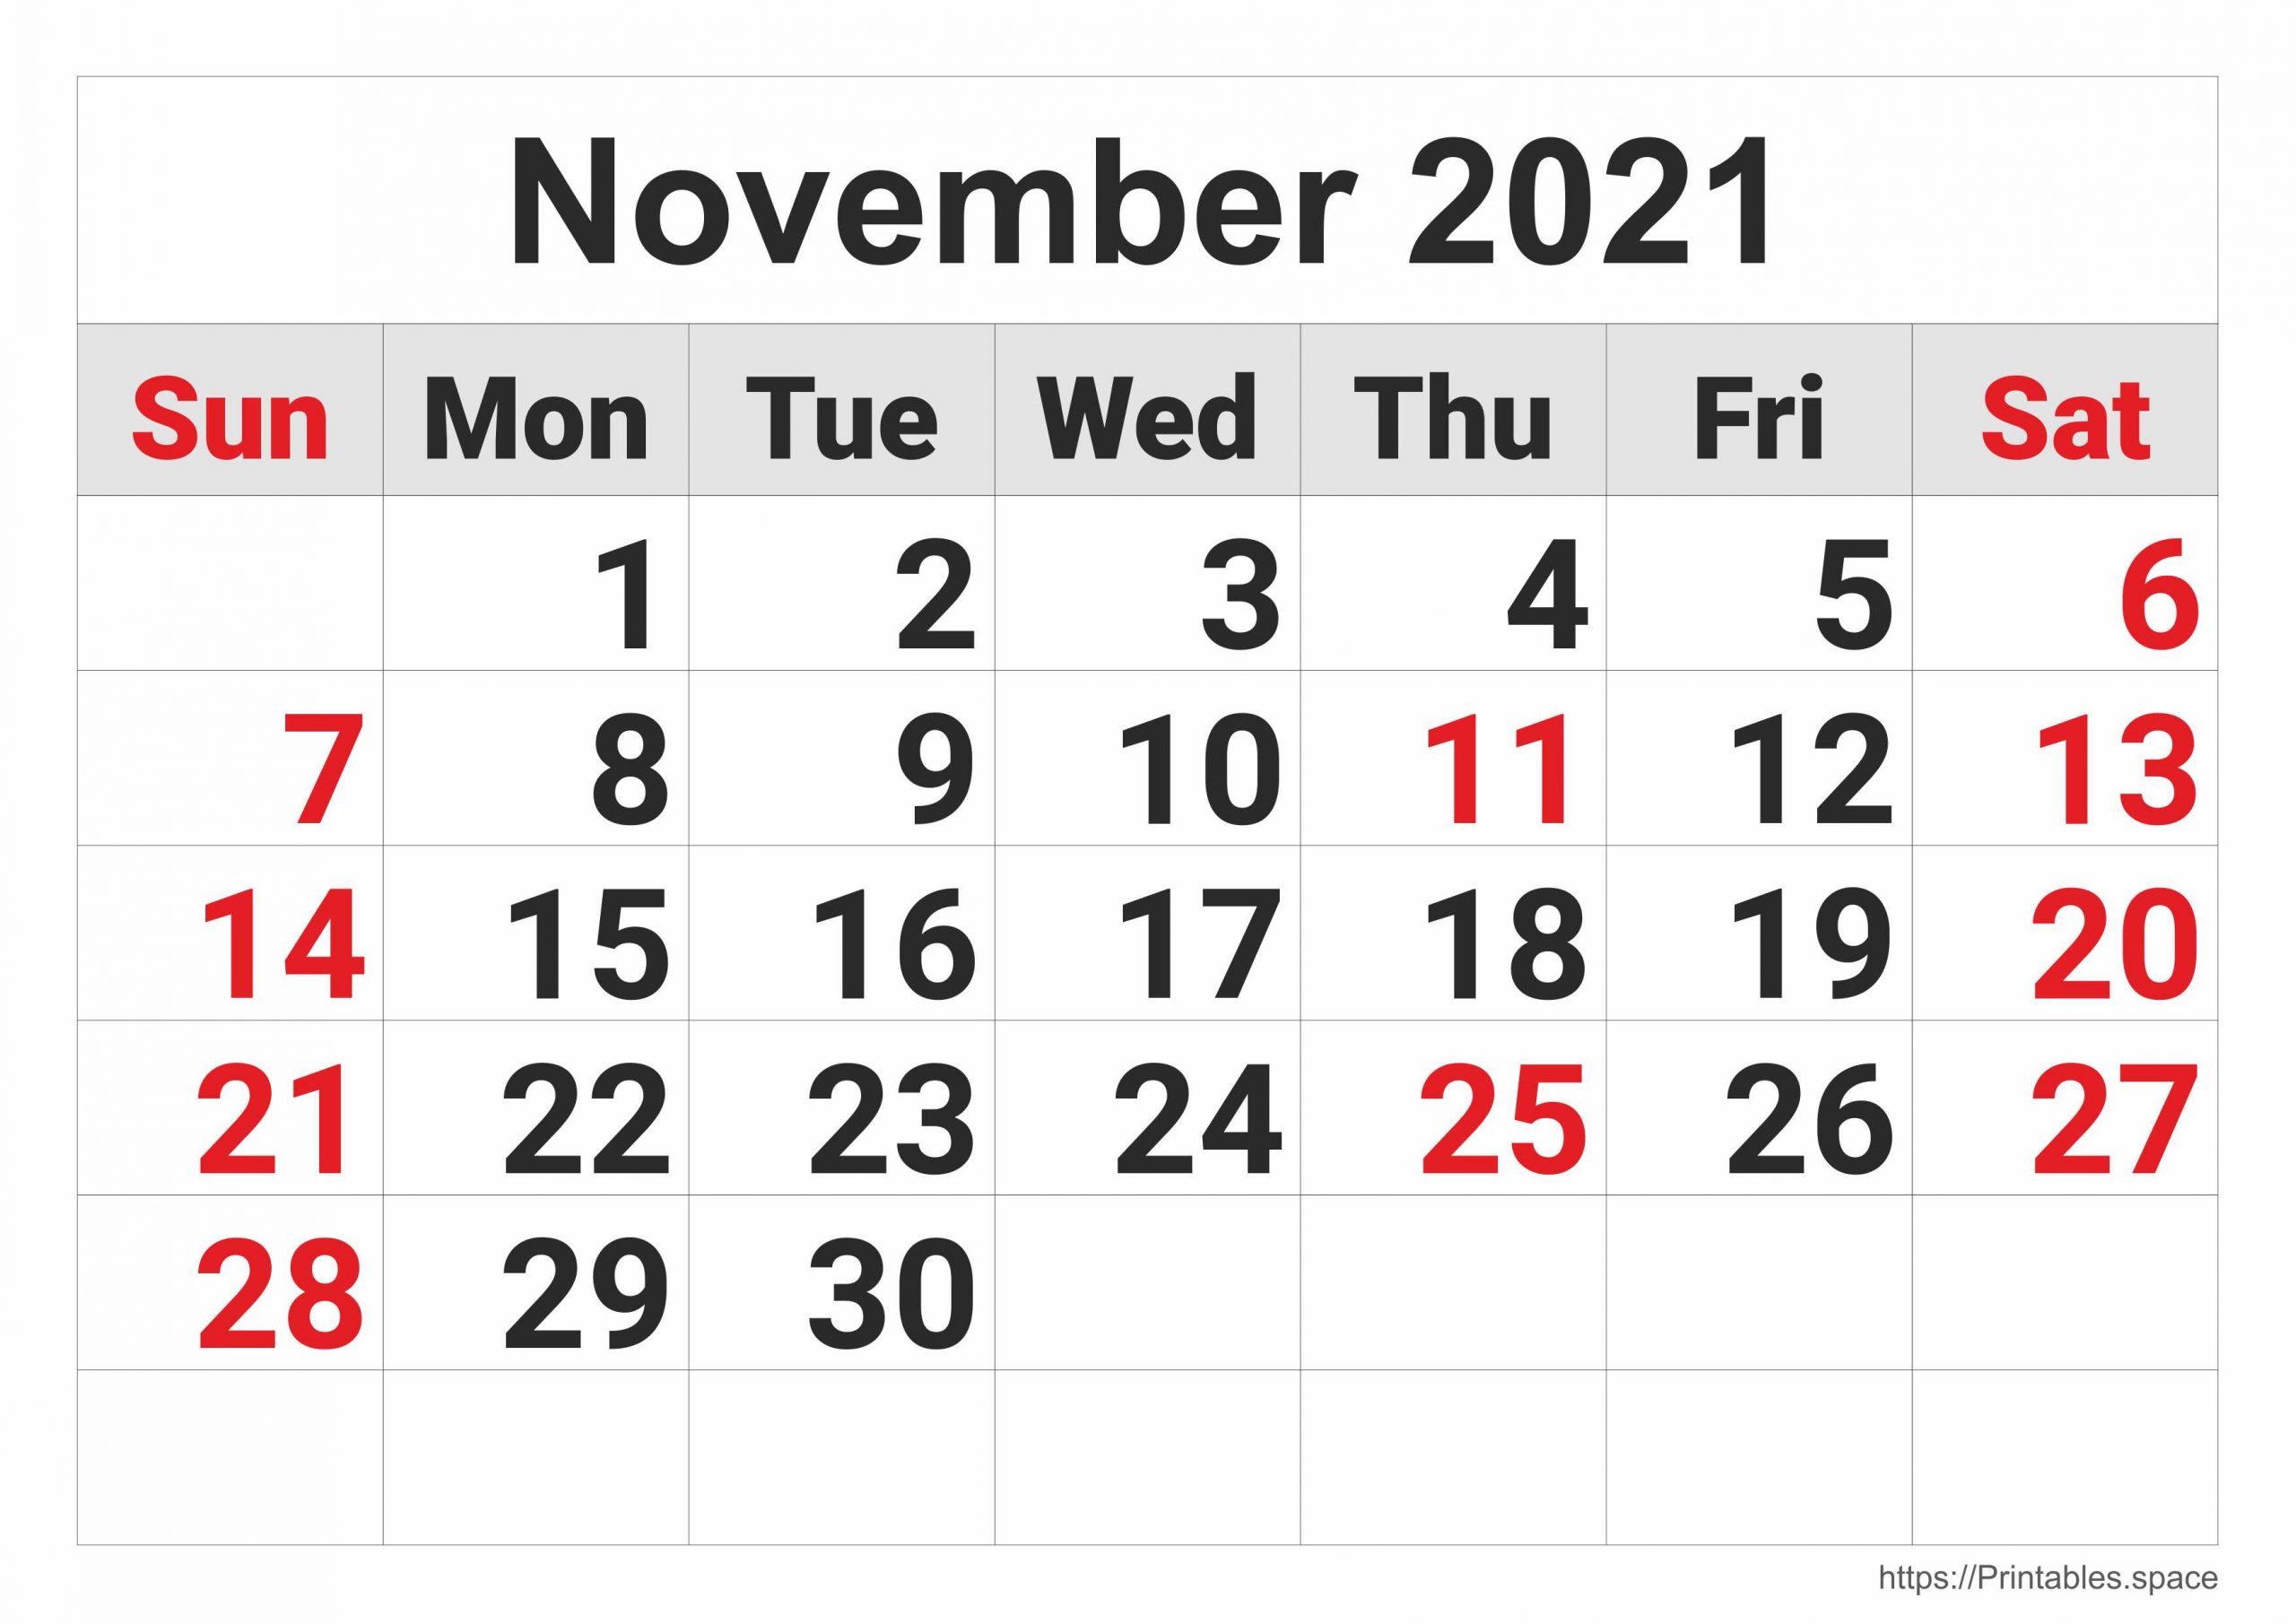 November 2021 Monthly Calendar - Free Printables November 2021 Free Calendar